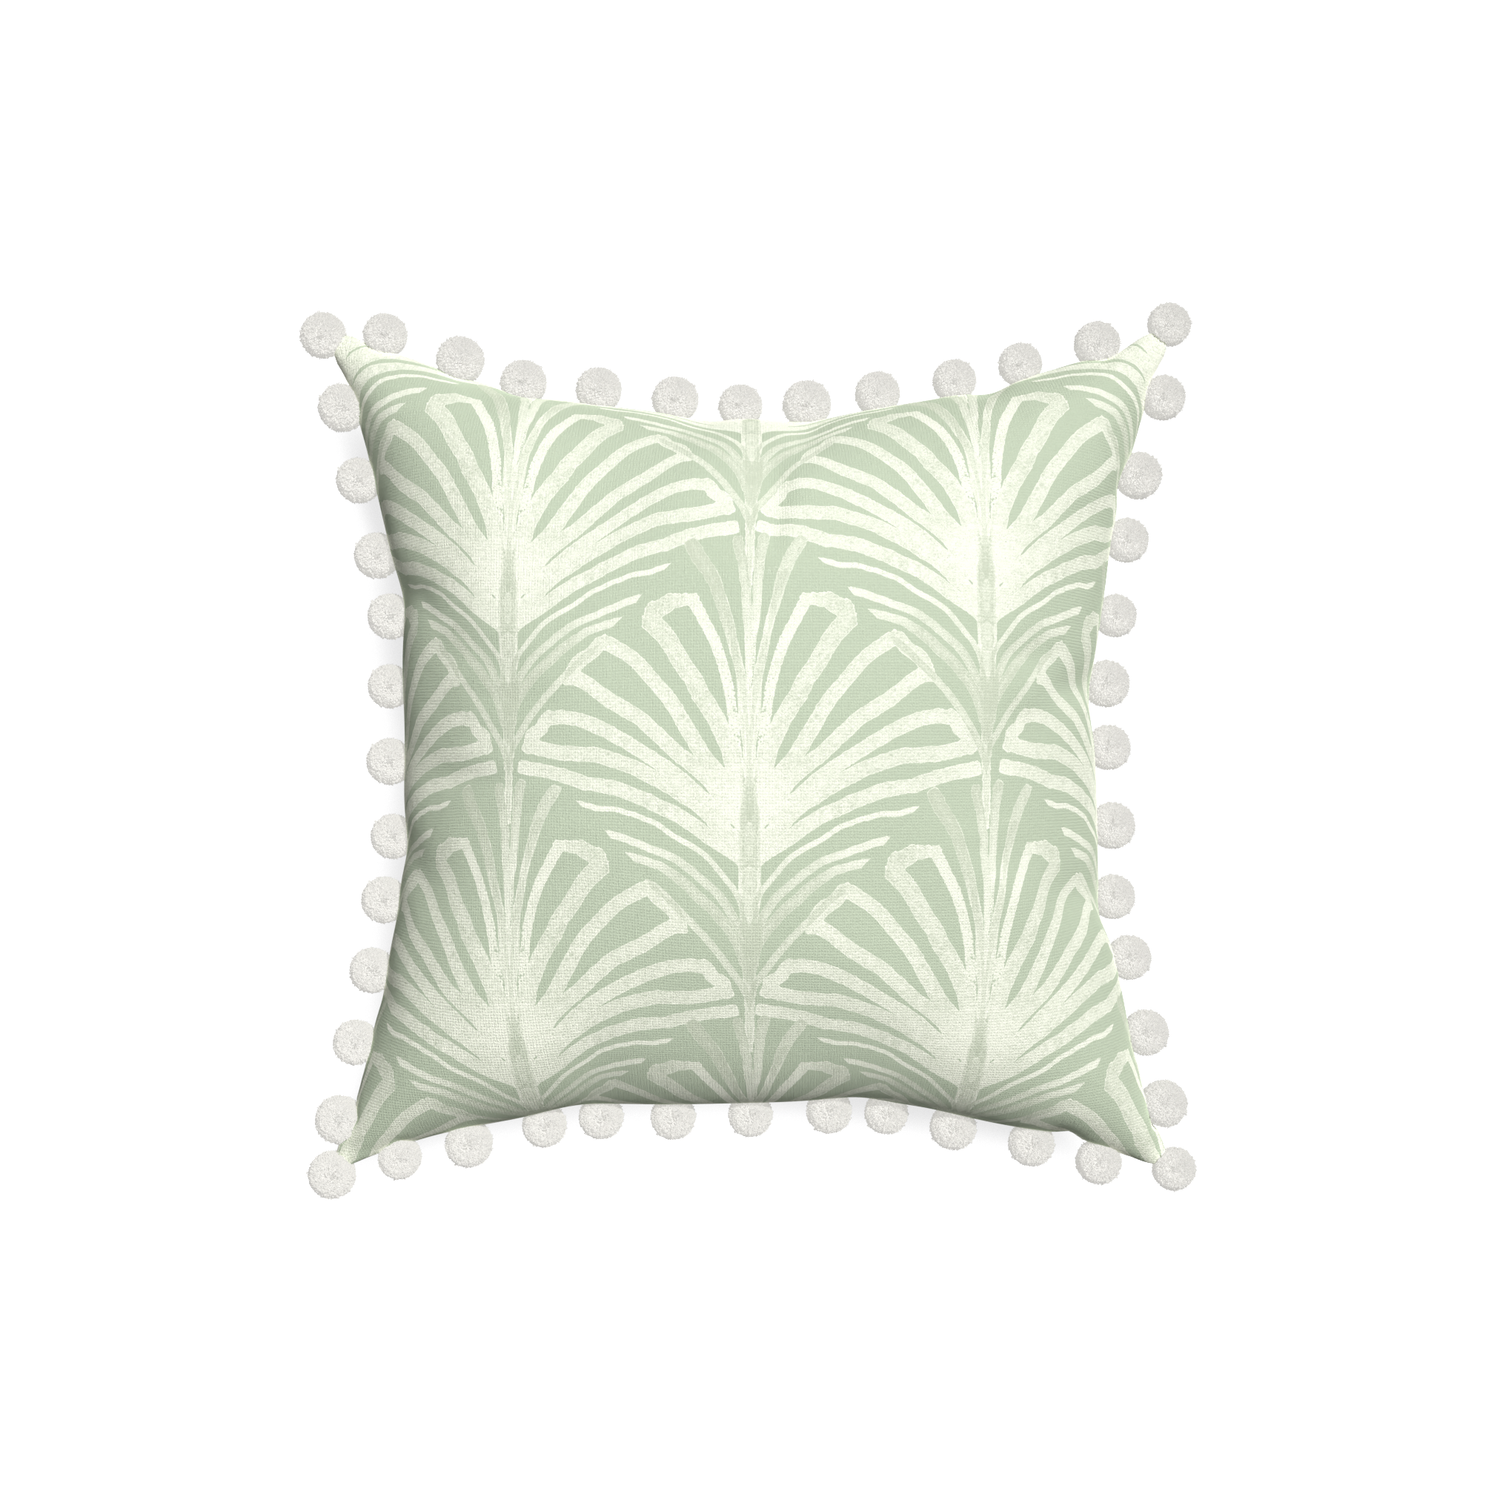 18-square suzy sage custom pillow with snow pom pom on white background